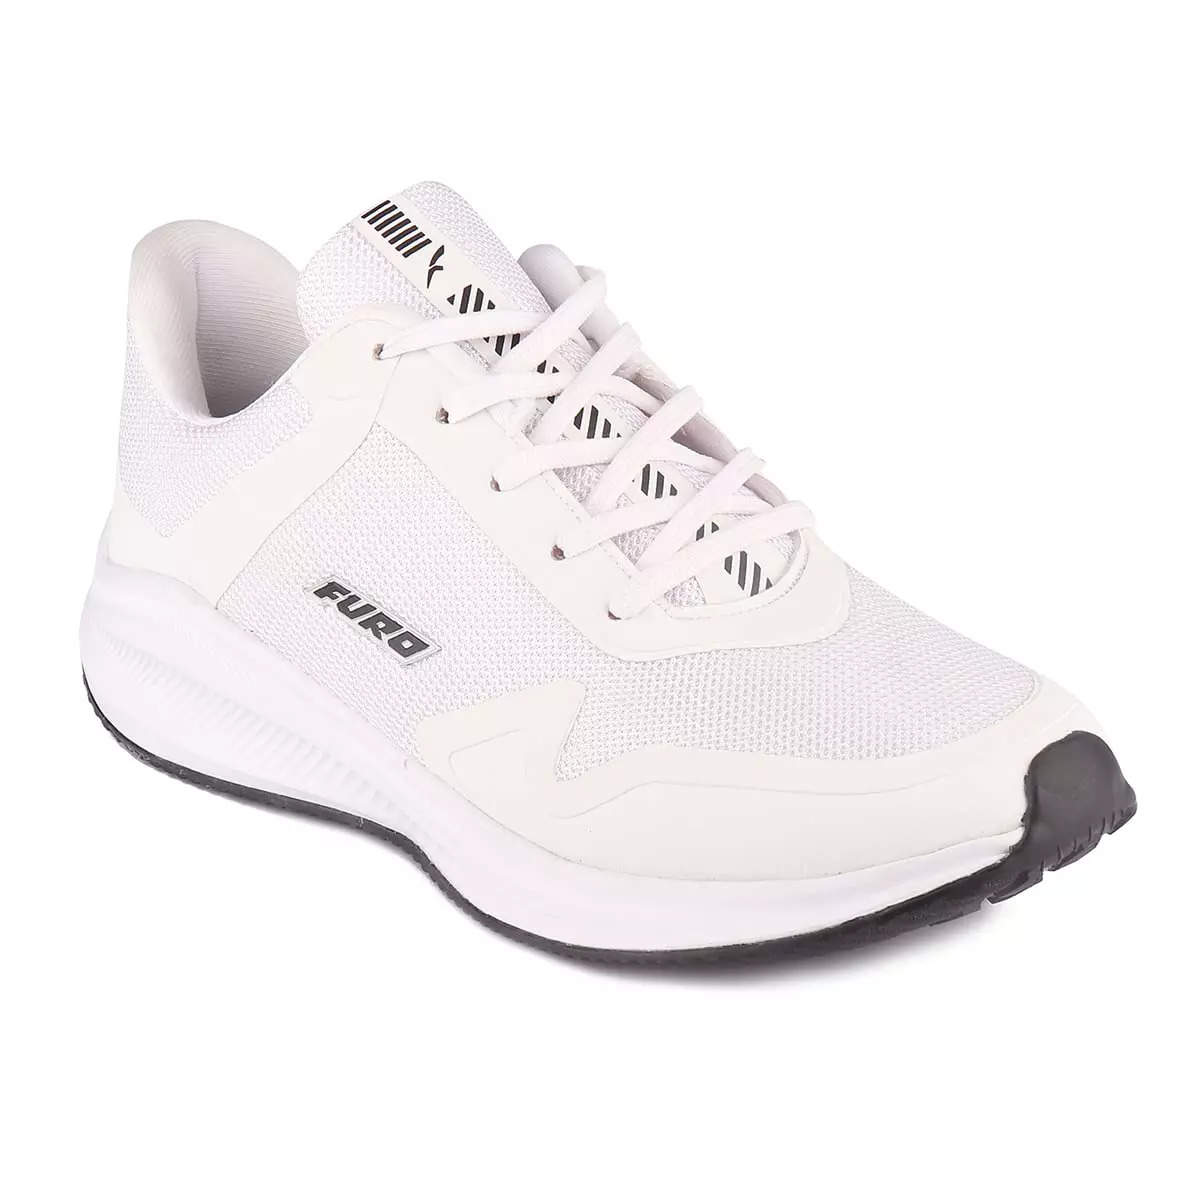 asian Waterproof-05 sports shoes for men | Latest Stylish Casual sport shoes  for men | running shoes for boys | Lace up Waterproof white shoes for  running, walking, gym, trekking, hiking &